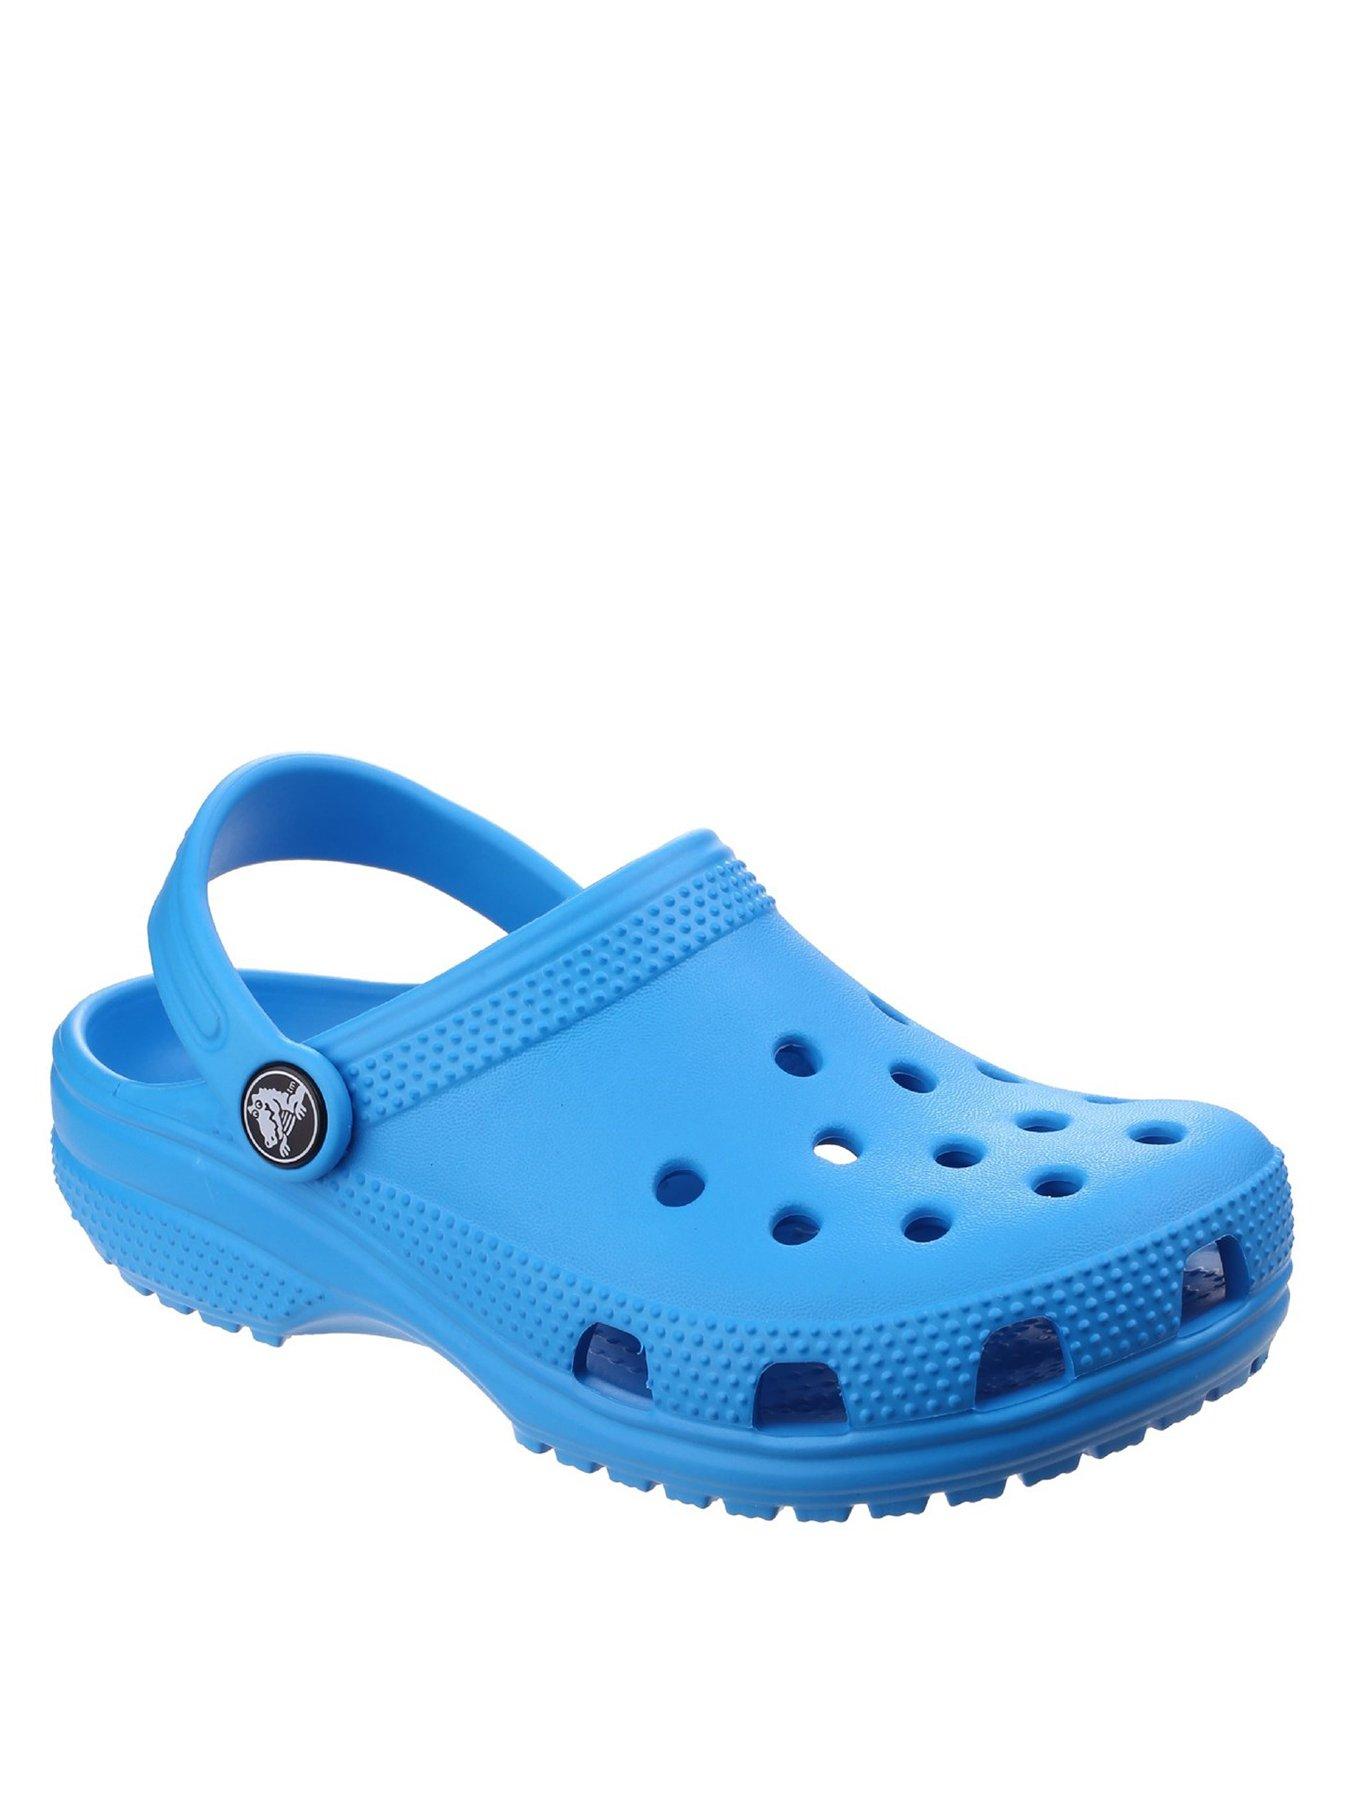 toddler crocs uk